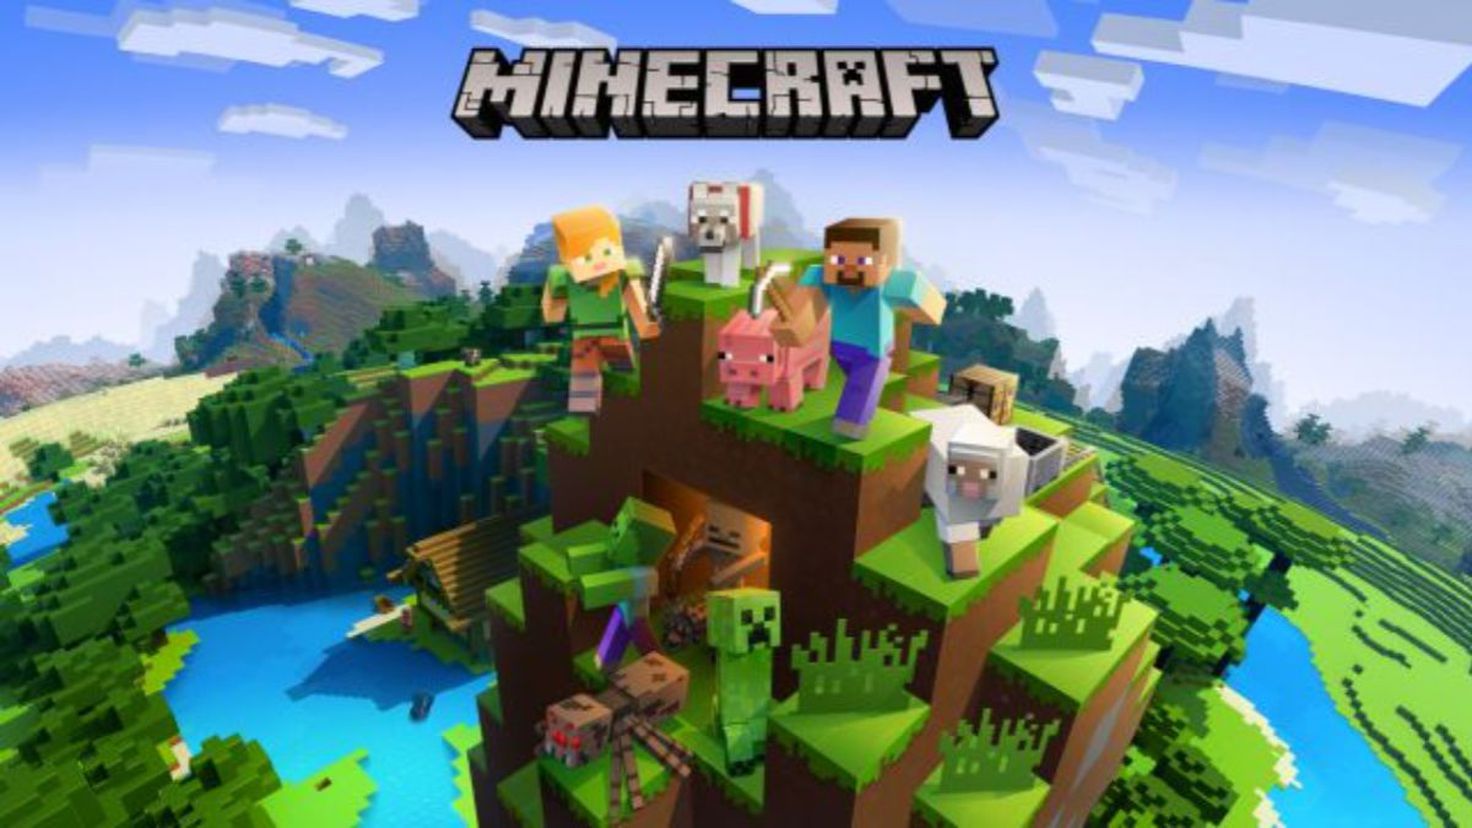  Minecraft - PlayStation 3 : Sony Interactive Entertai:  Everything Else